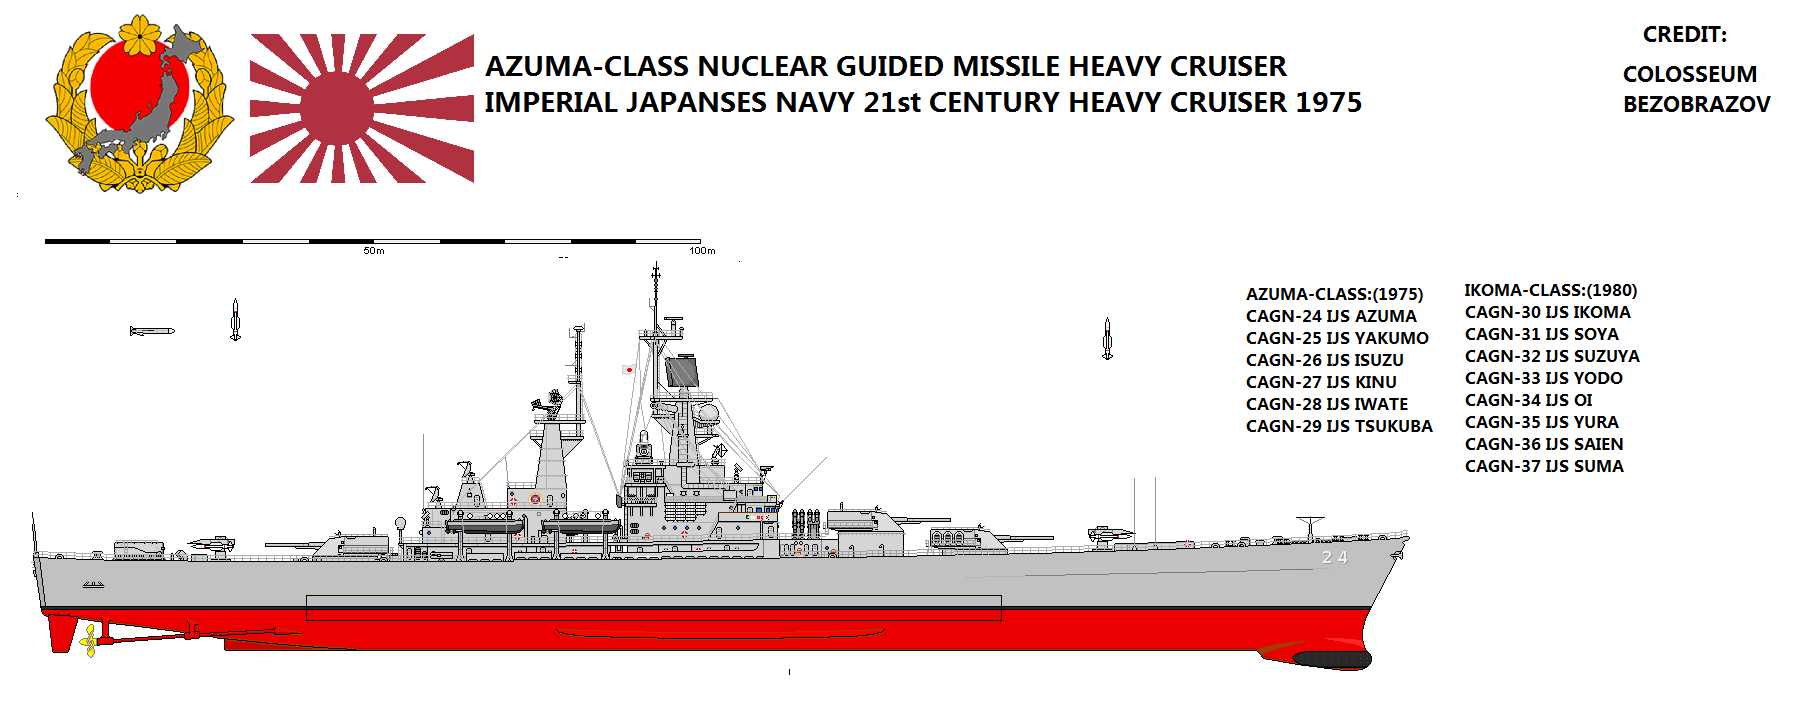 Zao Class Heavy Cruiser: IJN Kunimi - Shipbucket